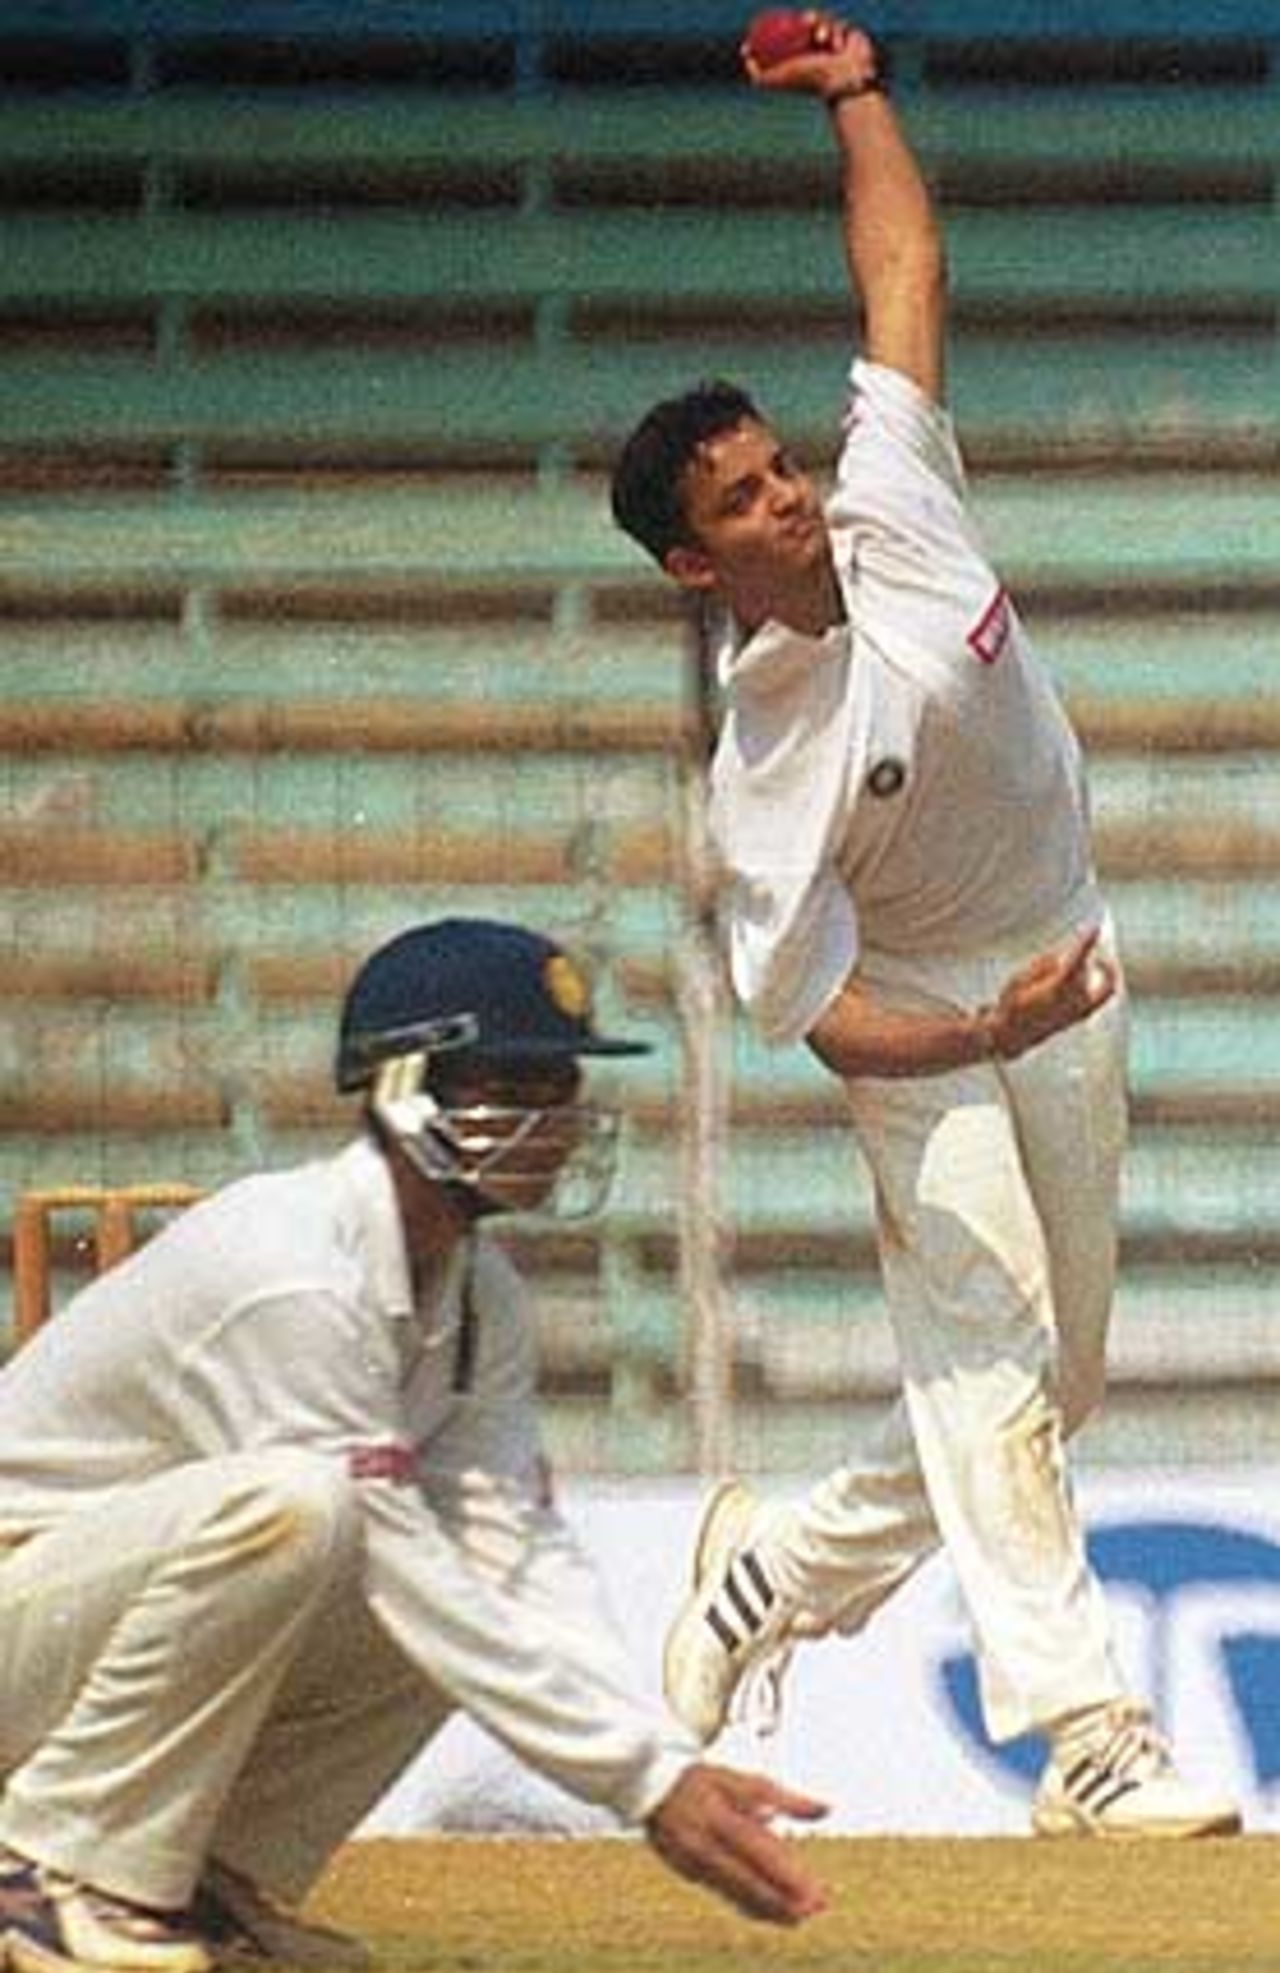 Murali Kartik in action at the Wankhede Stadium during the Irani Trophy, Irani Trophy, 2000/01, Mumbai v Rest of India, Wankhede Stadium, Mumbai, 13-17 October 2000 (Day 1).